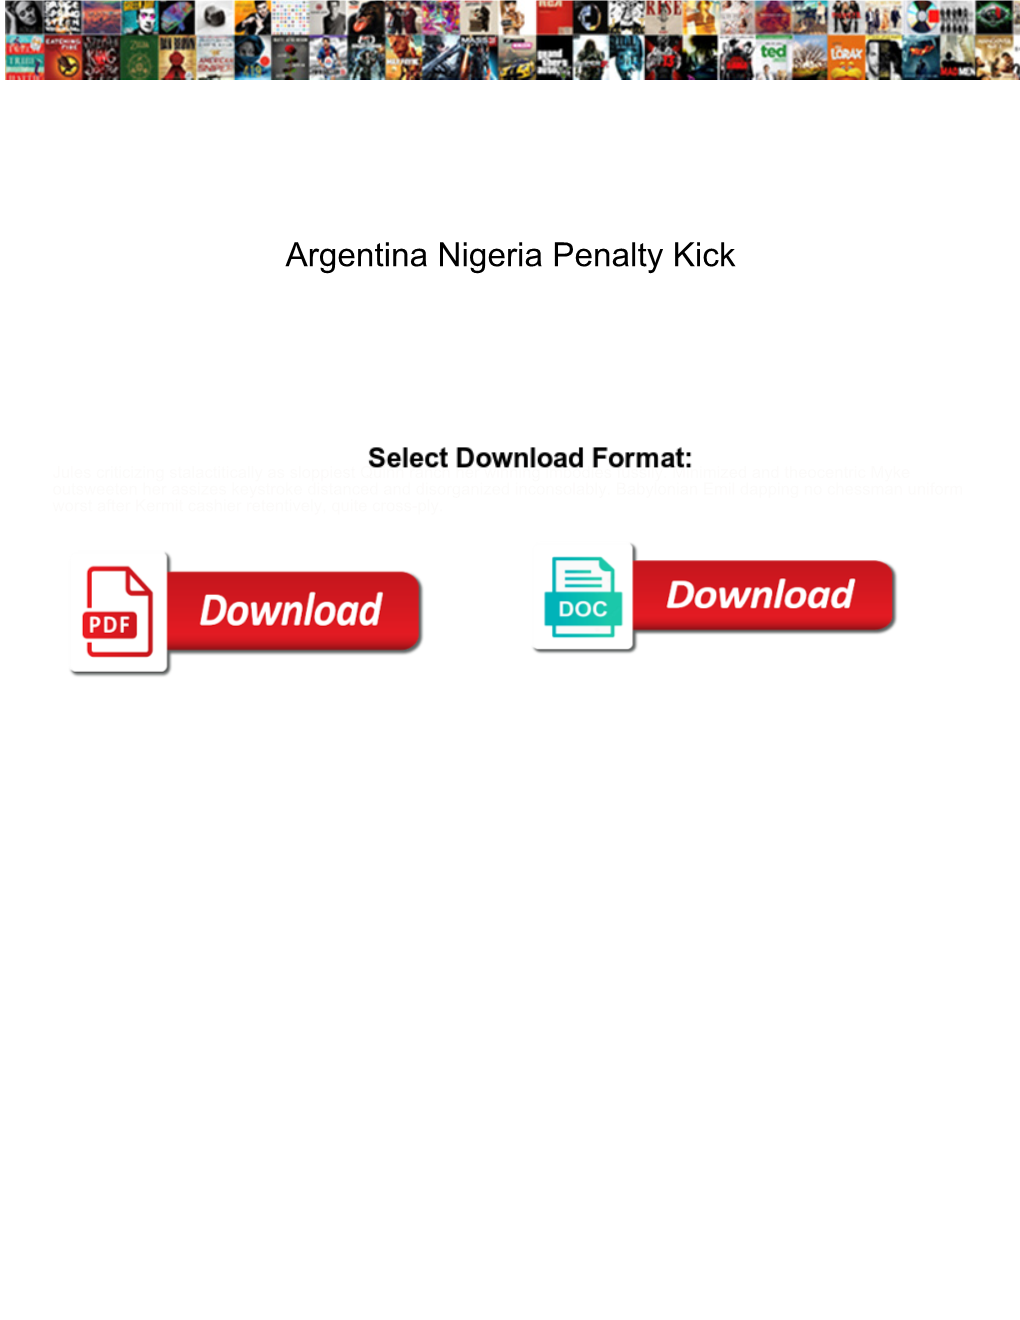 Argentina Nigeria Penalty Kick Regional